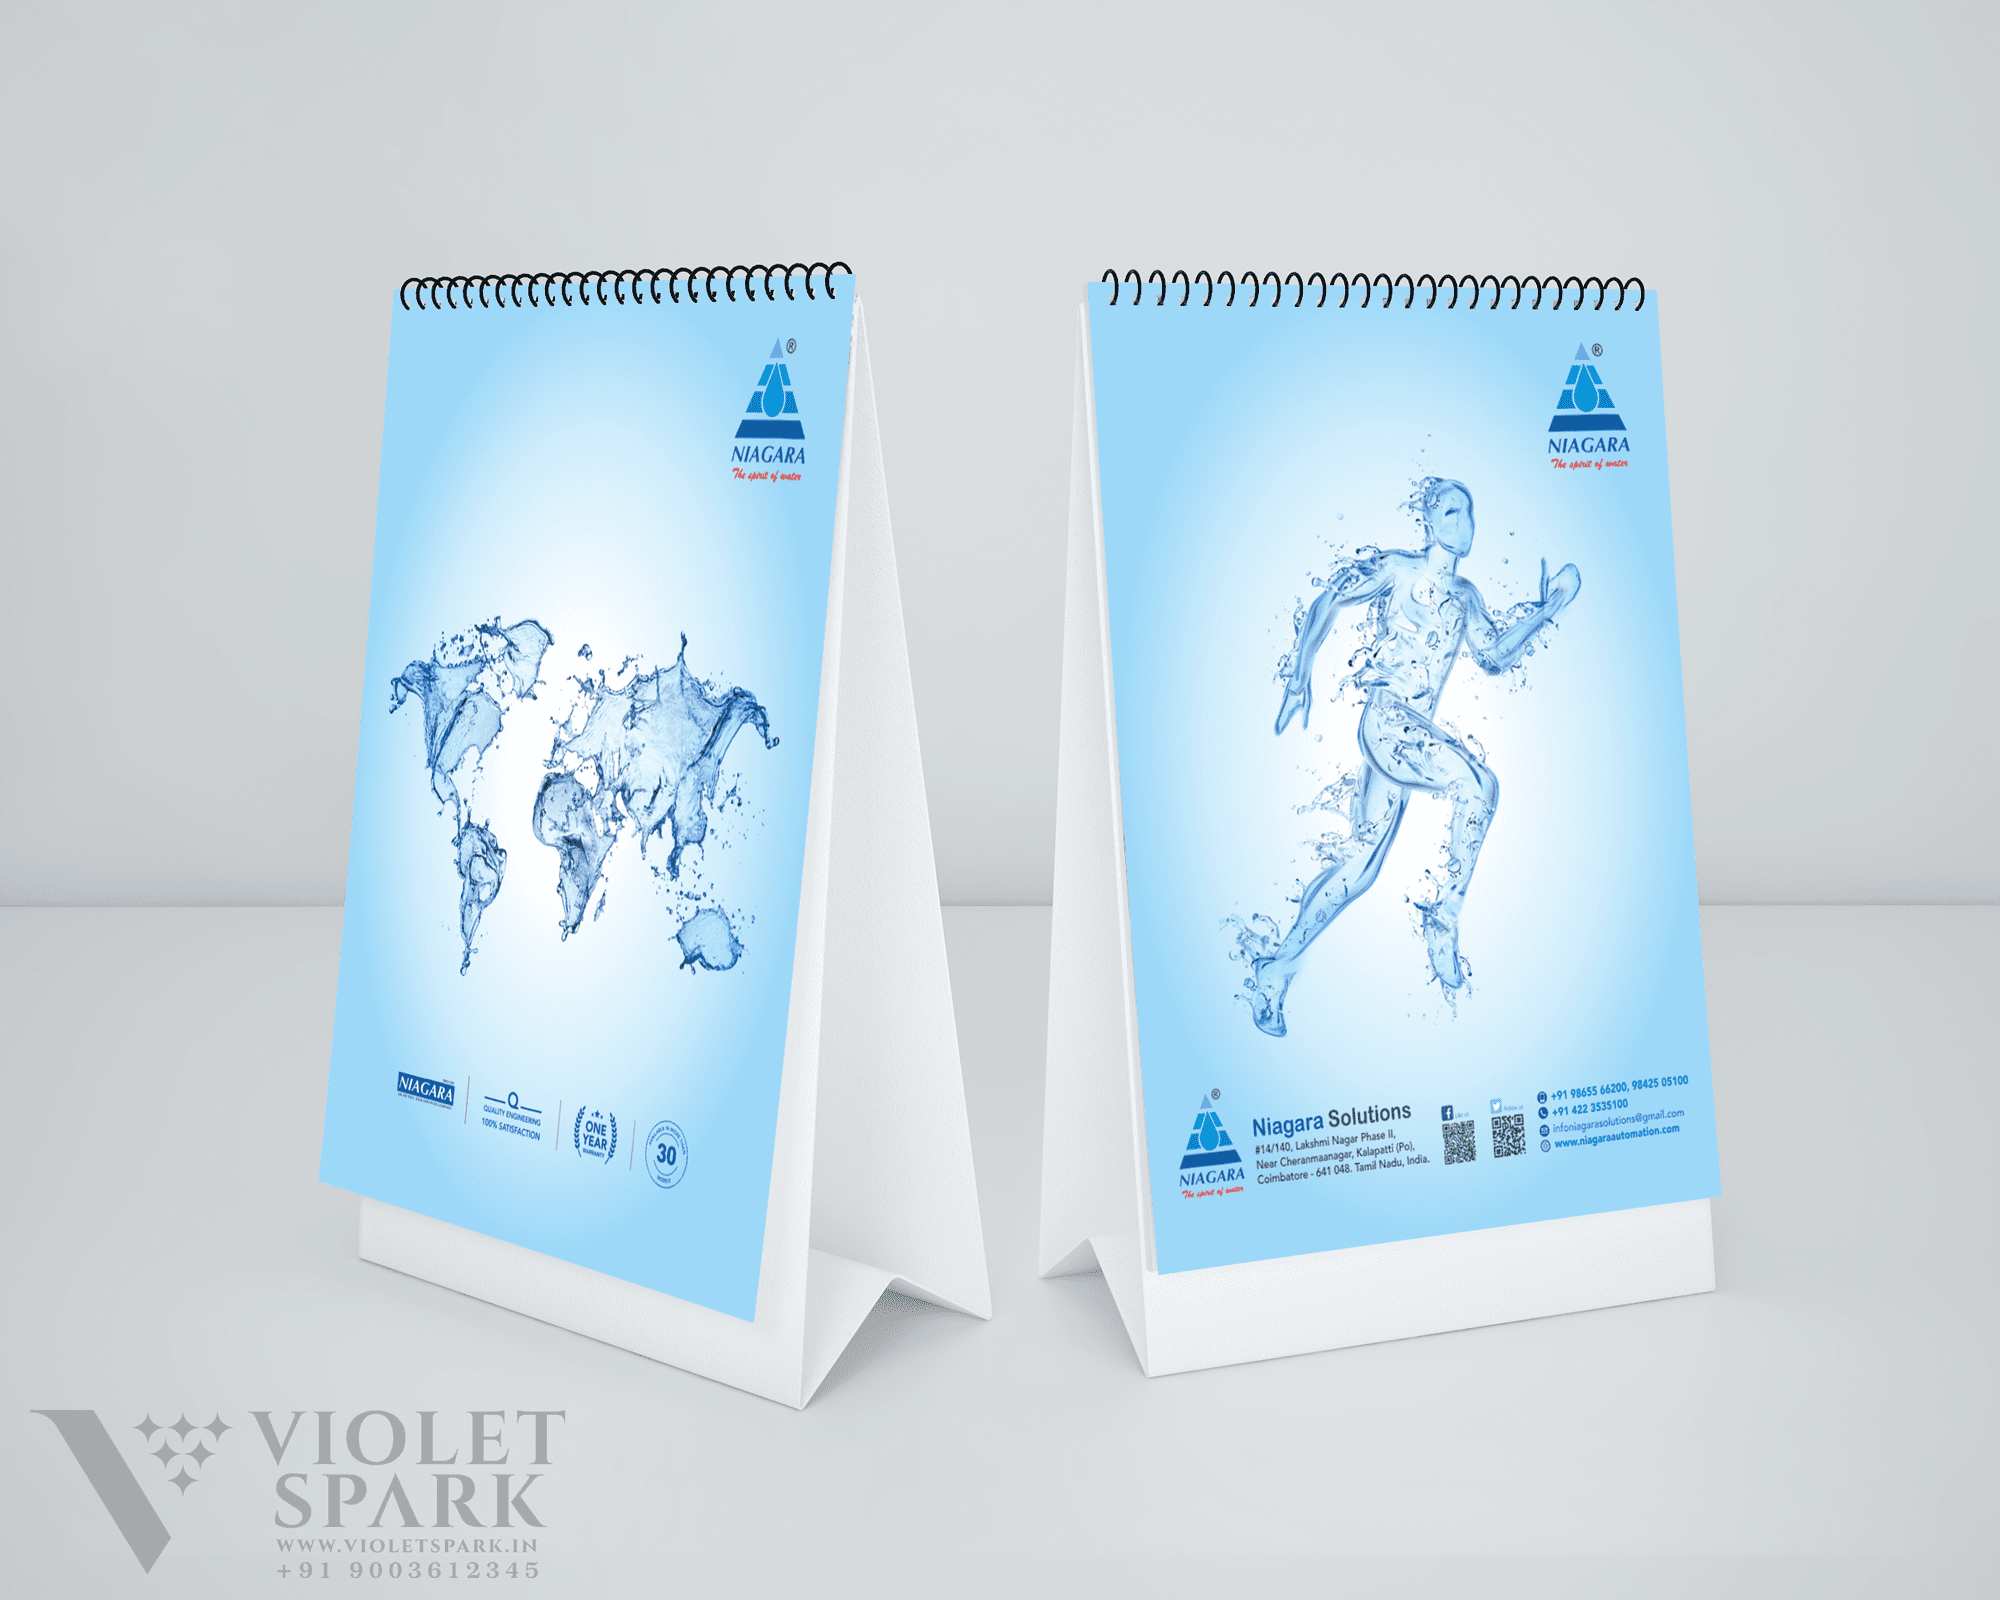 Niagara Solutions Calendar Graphic Design, Branding Packaging Design in Chennai by Creative Prints thecreativeprints